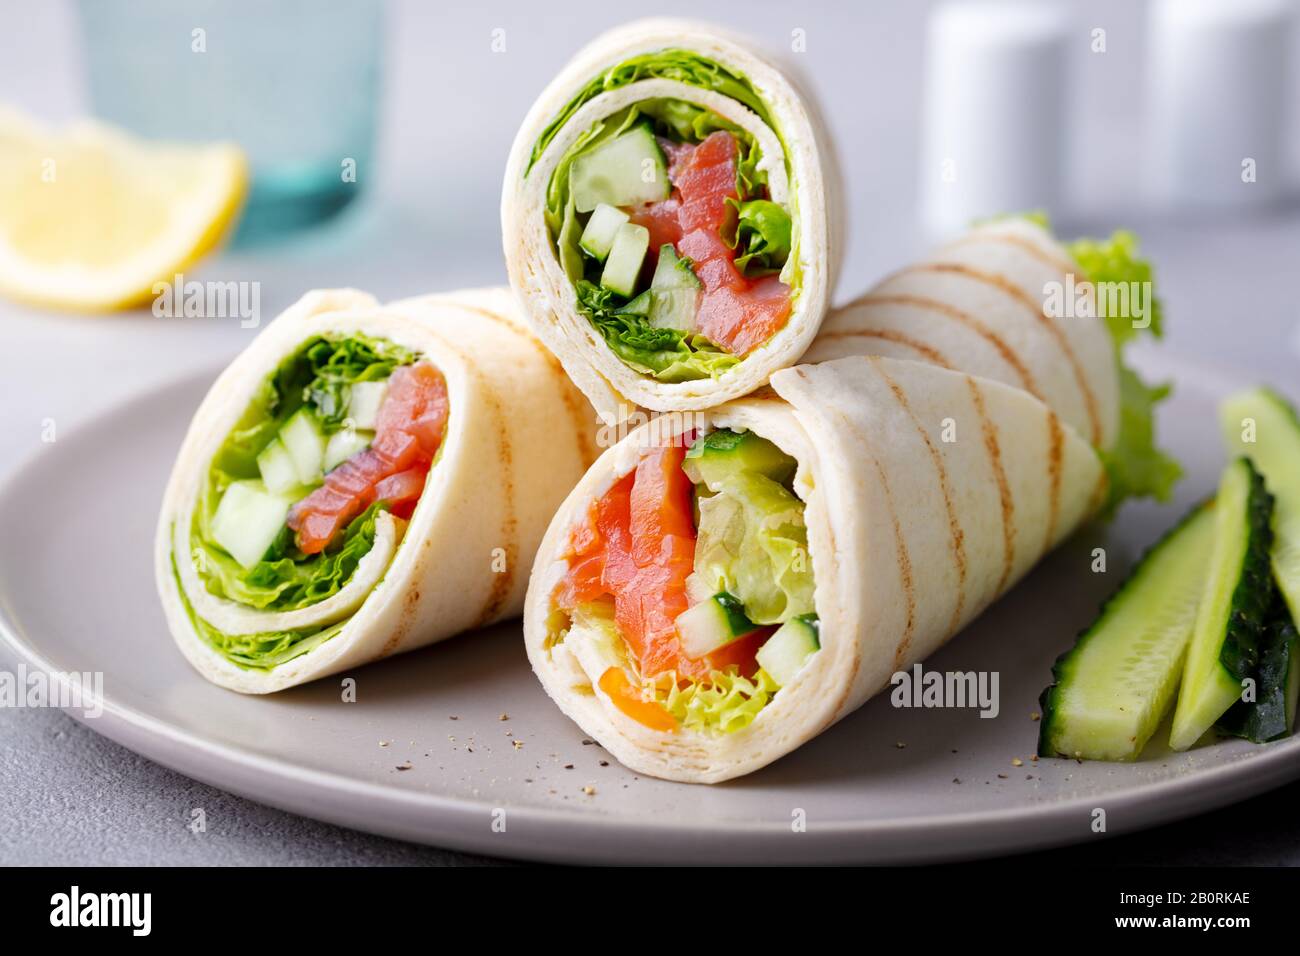 https://c8.alamy.com/comp/2B0RKAE/wrap-sandwich-roll-with-fish-salmon-and-vegetables-grey-background-close-up-2B0RKAE.jpg